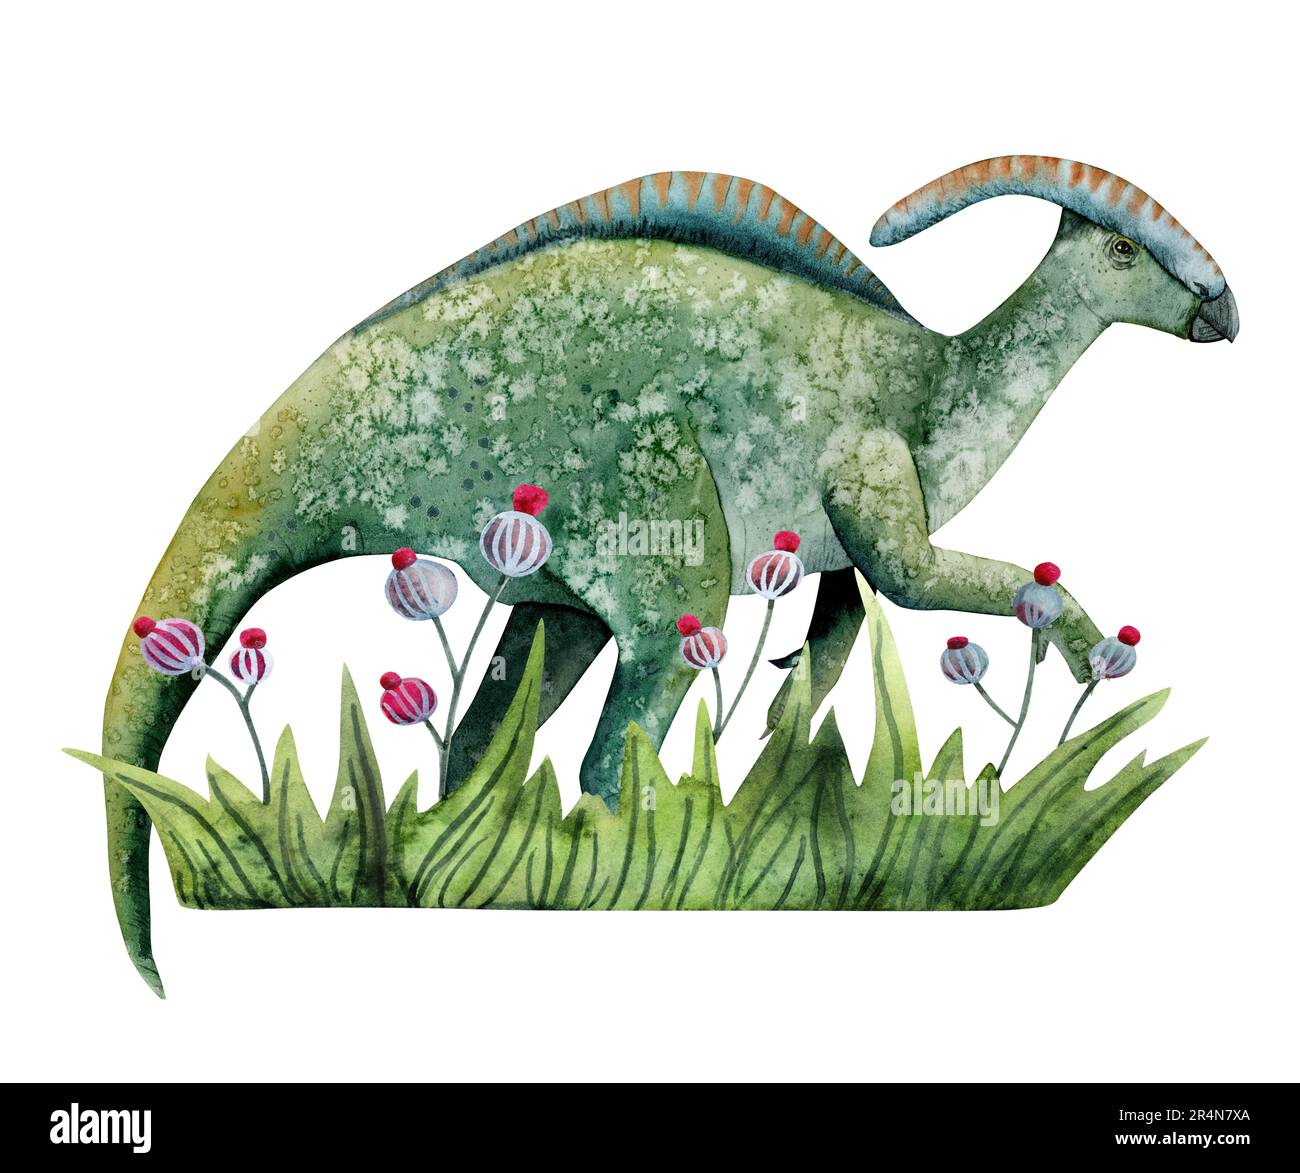 Parasaurolophus dinosaur on grass with fantasy flowers landscape watercolor illustration Stock Photo